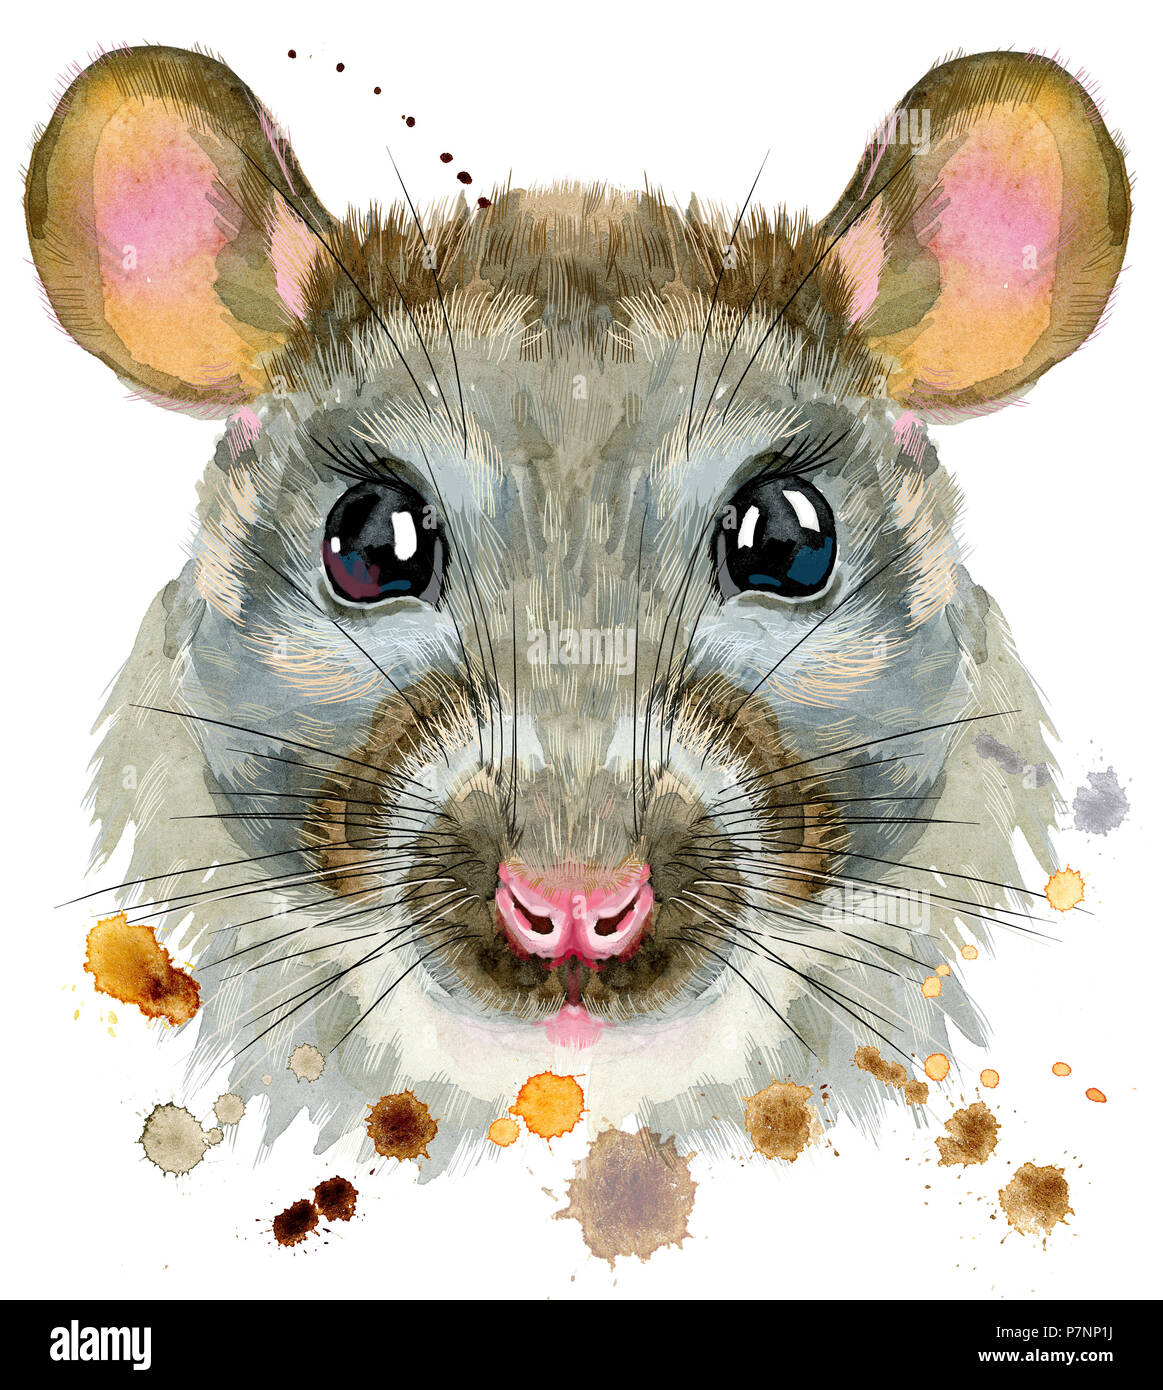 Cute rat for t-shirt graphics. Watercolor rat illustration Stock Photo